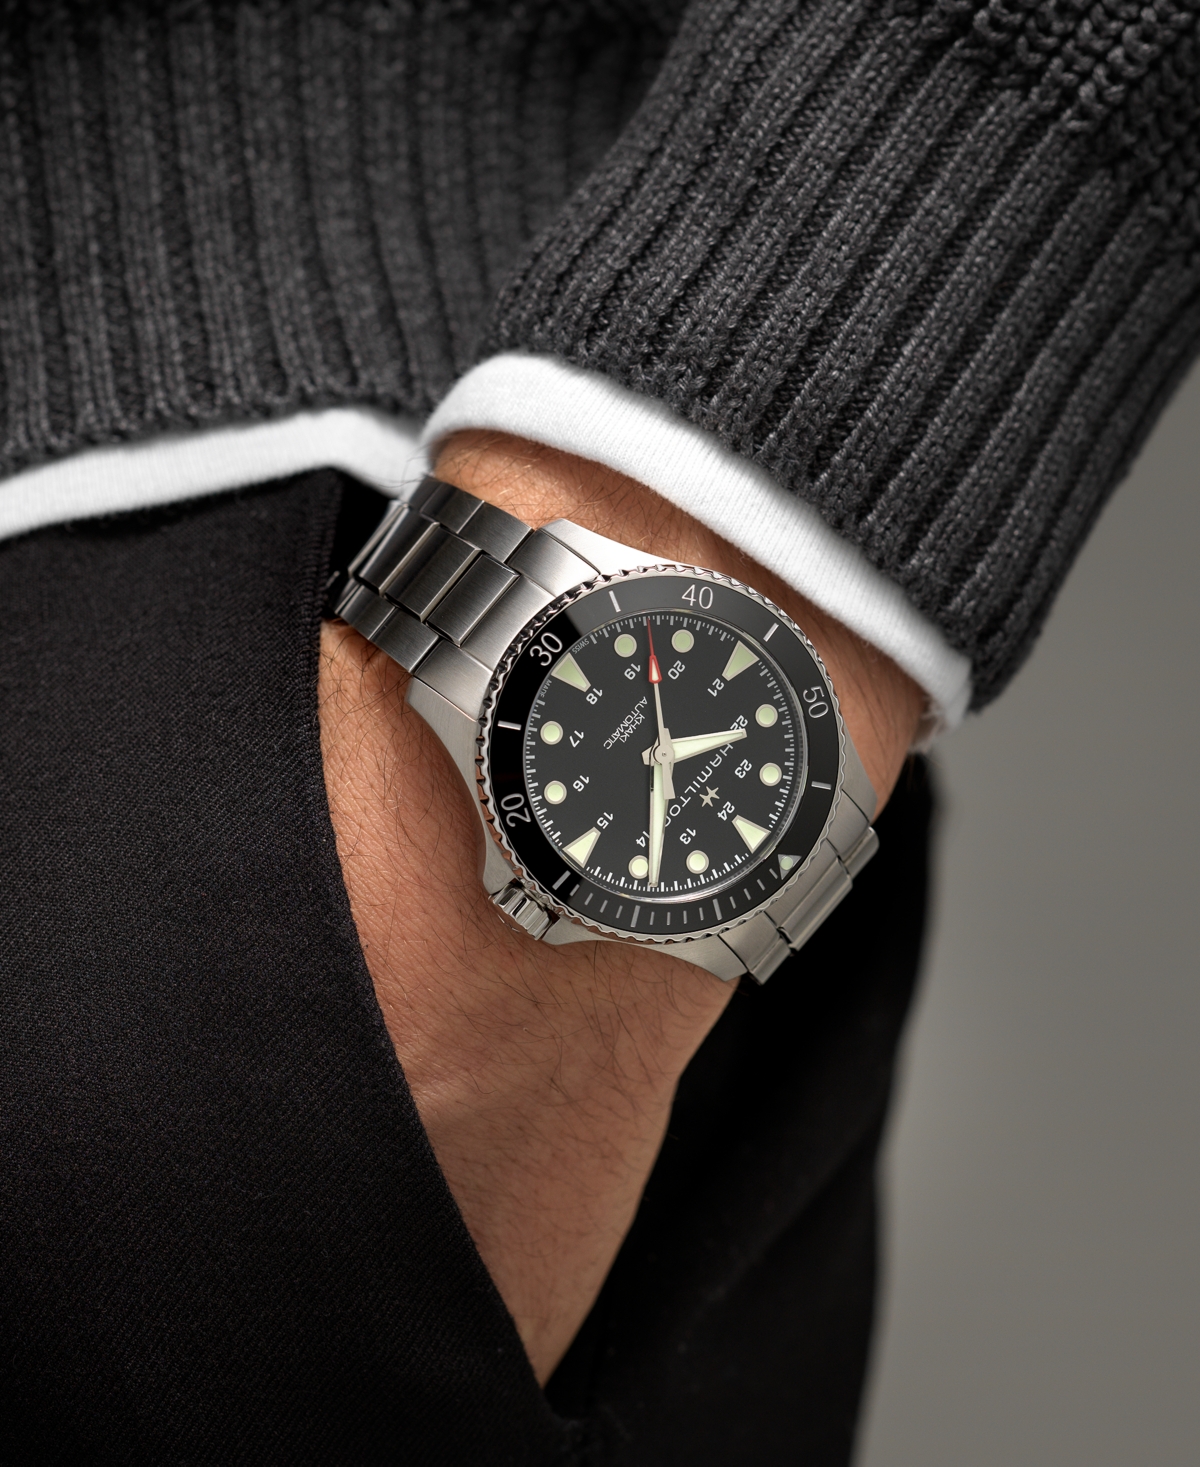 Shop Hamilton Men's Swiss Automatic Khaki Navy Scuba Stainless Steel Bracelet Watch 43mm